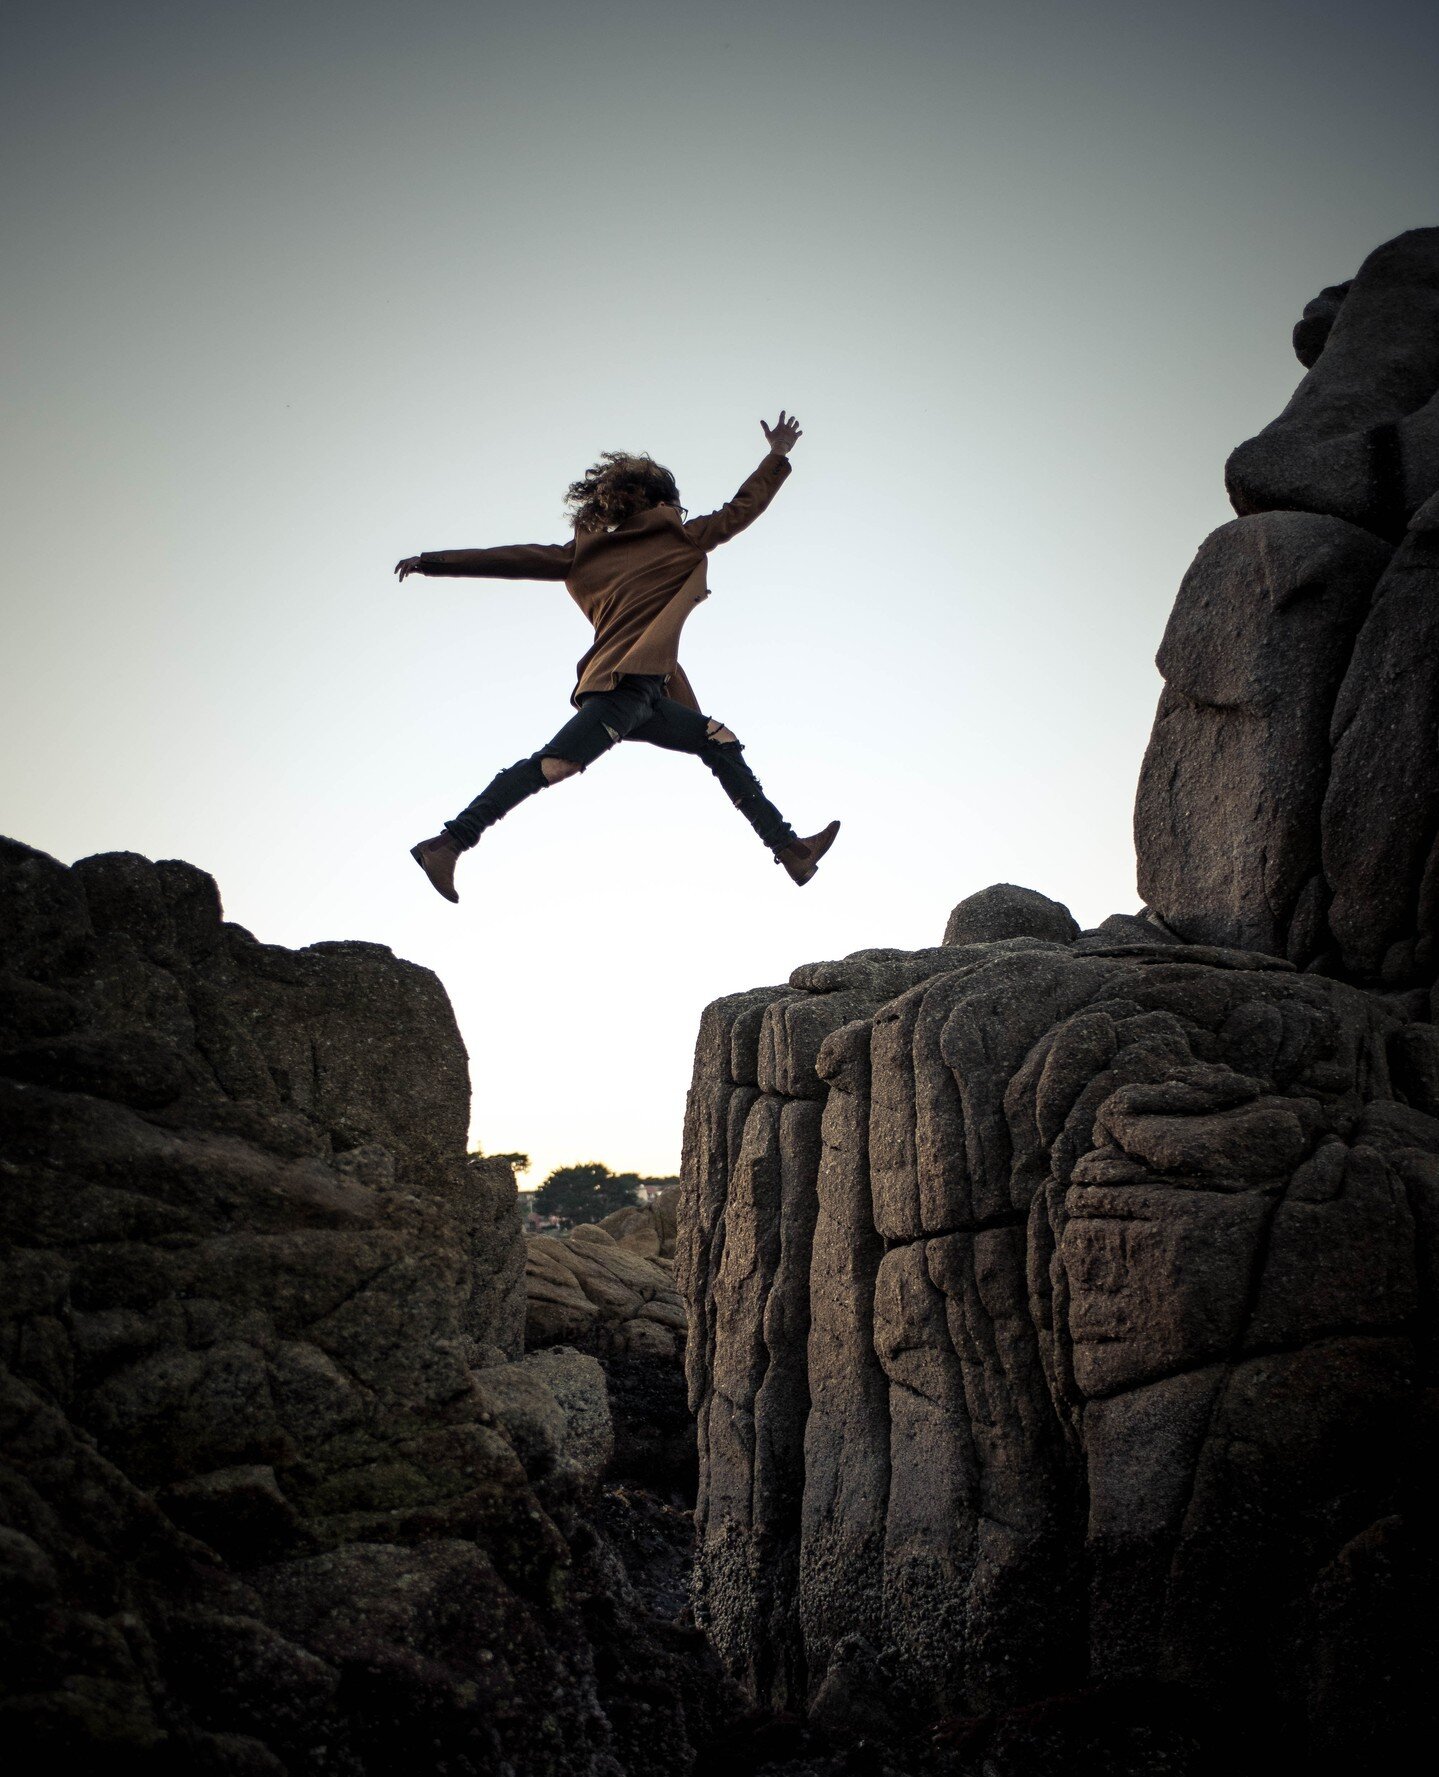 When's the last time you felt brave?⁠
⁠
🧡⁠
*⁠
*⁠
*⁠
#jump #friday #feelbrave #endoftheweek #reflection